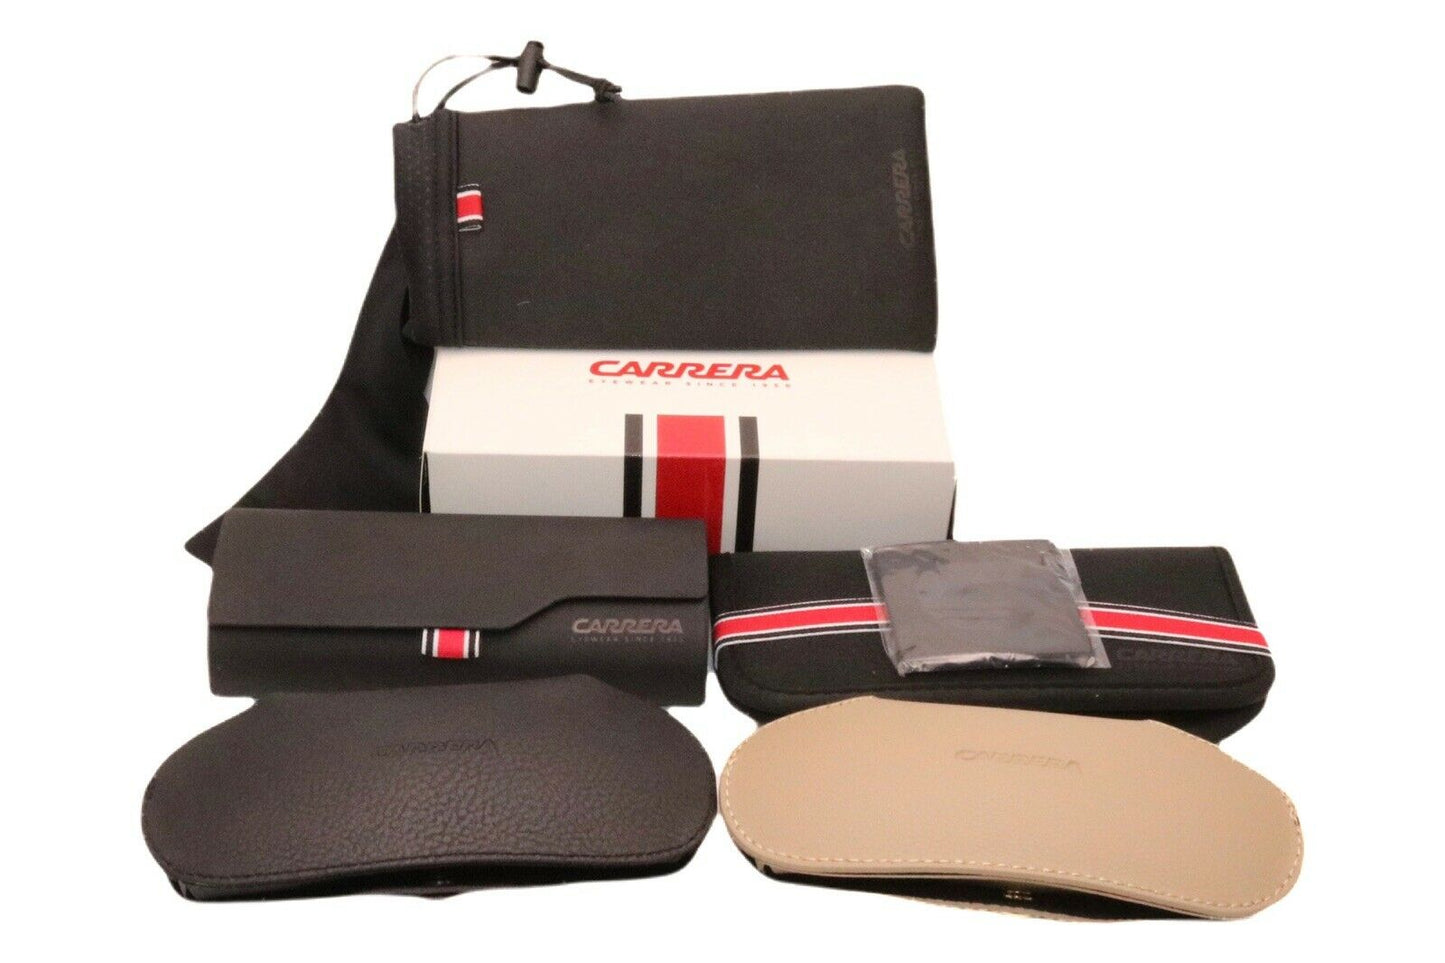 Carrera CARRERA 1026/S-0003 IR 59mm New Sunglasses